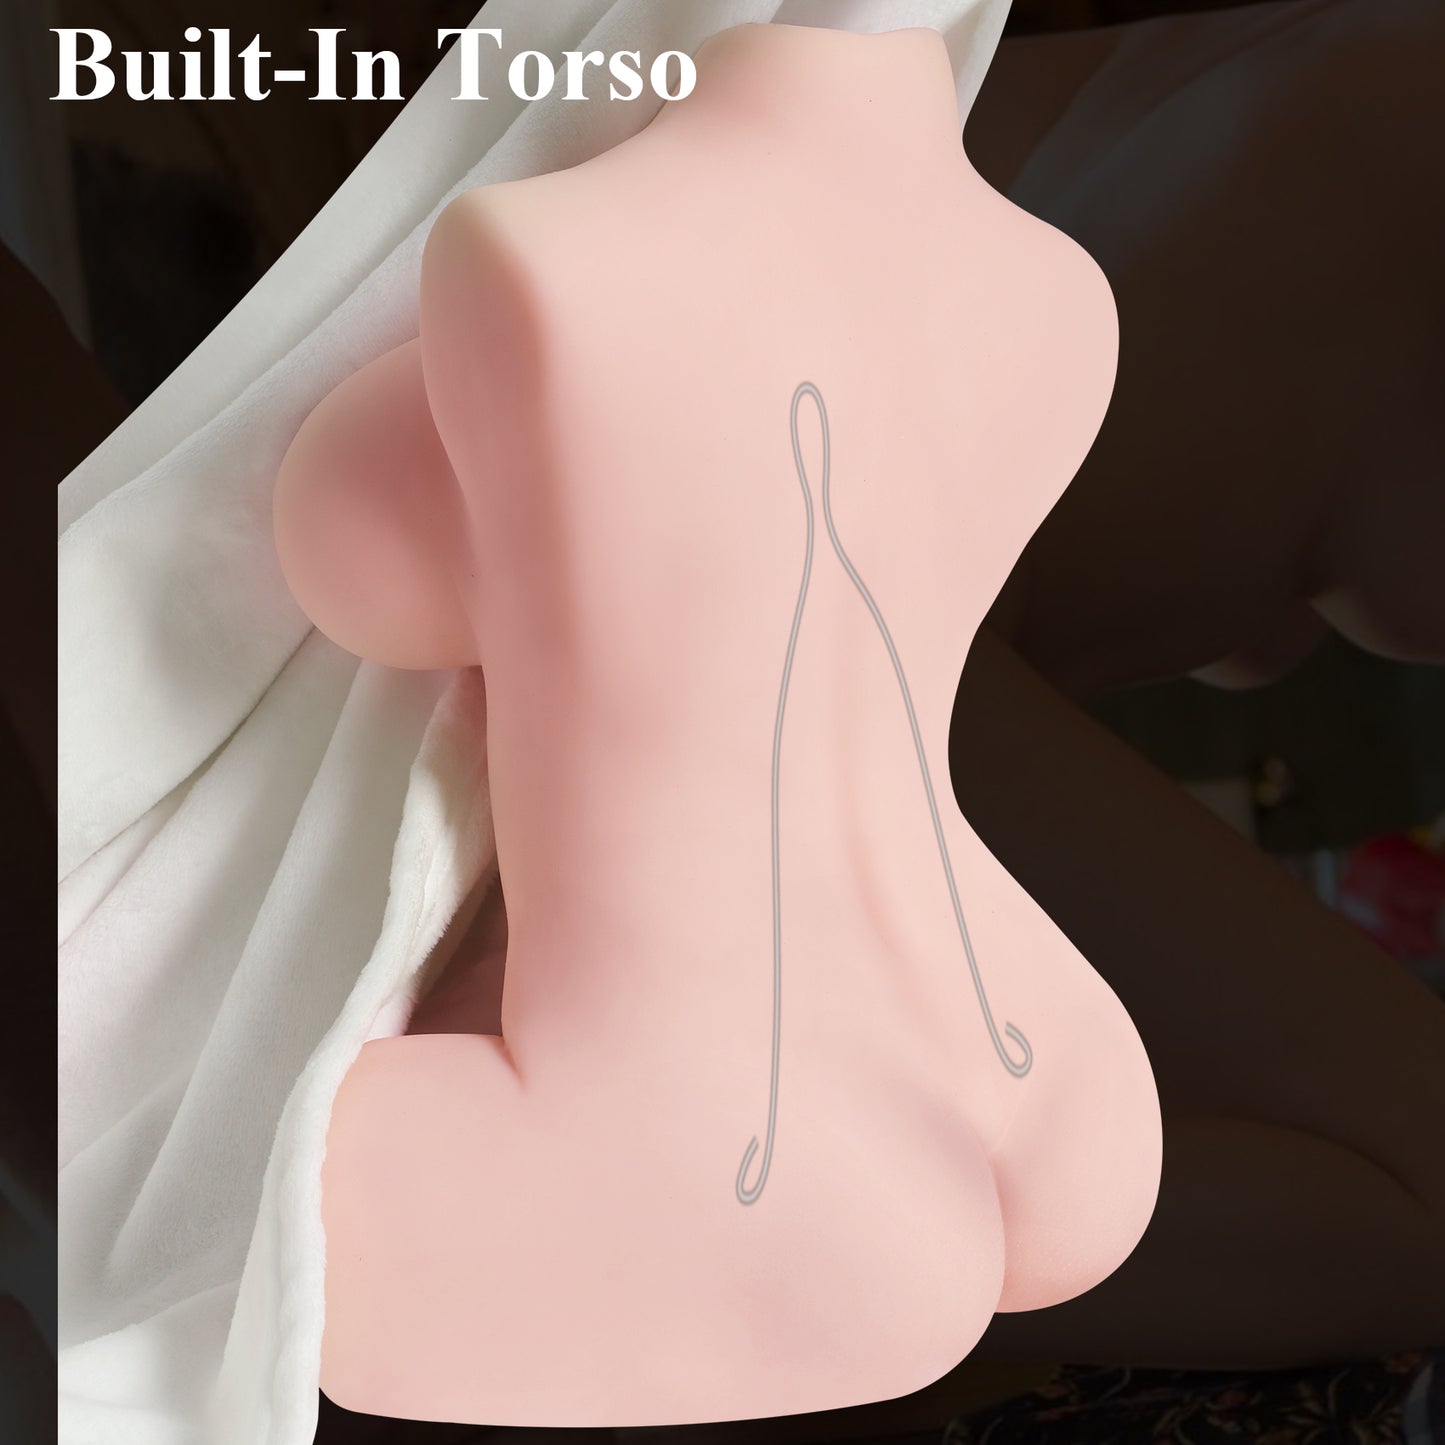 3 in 1 Love Doll Female Body Torso Doll Male Sex Toys (17Ibs, 16.6x14x6.3In)